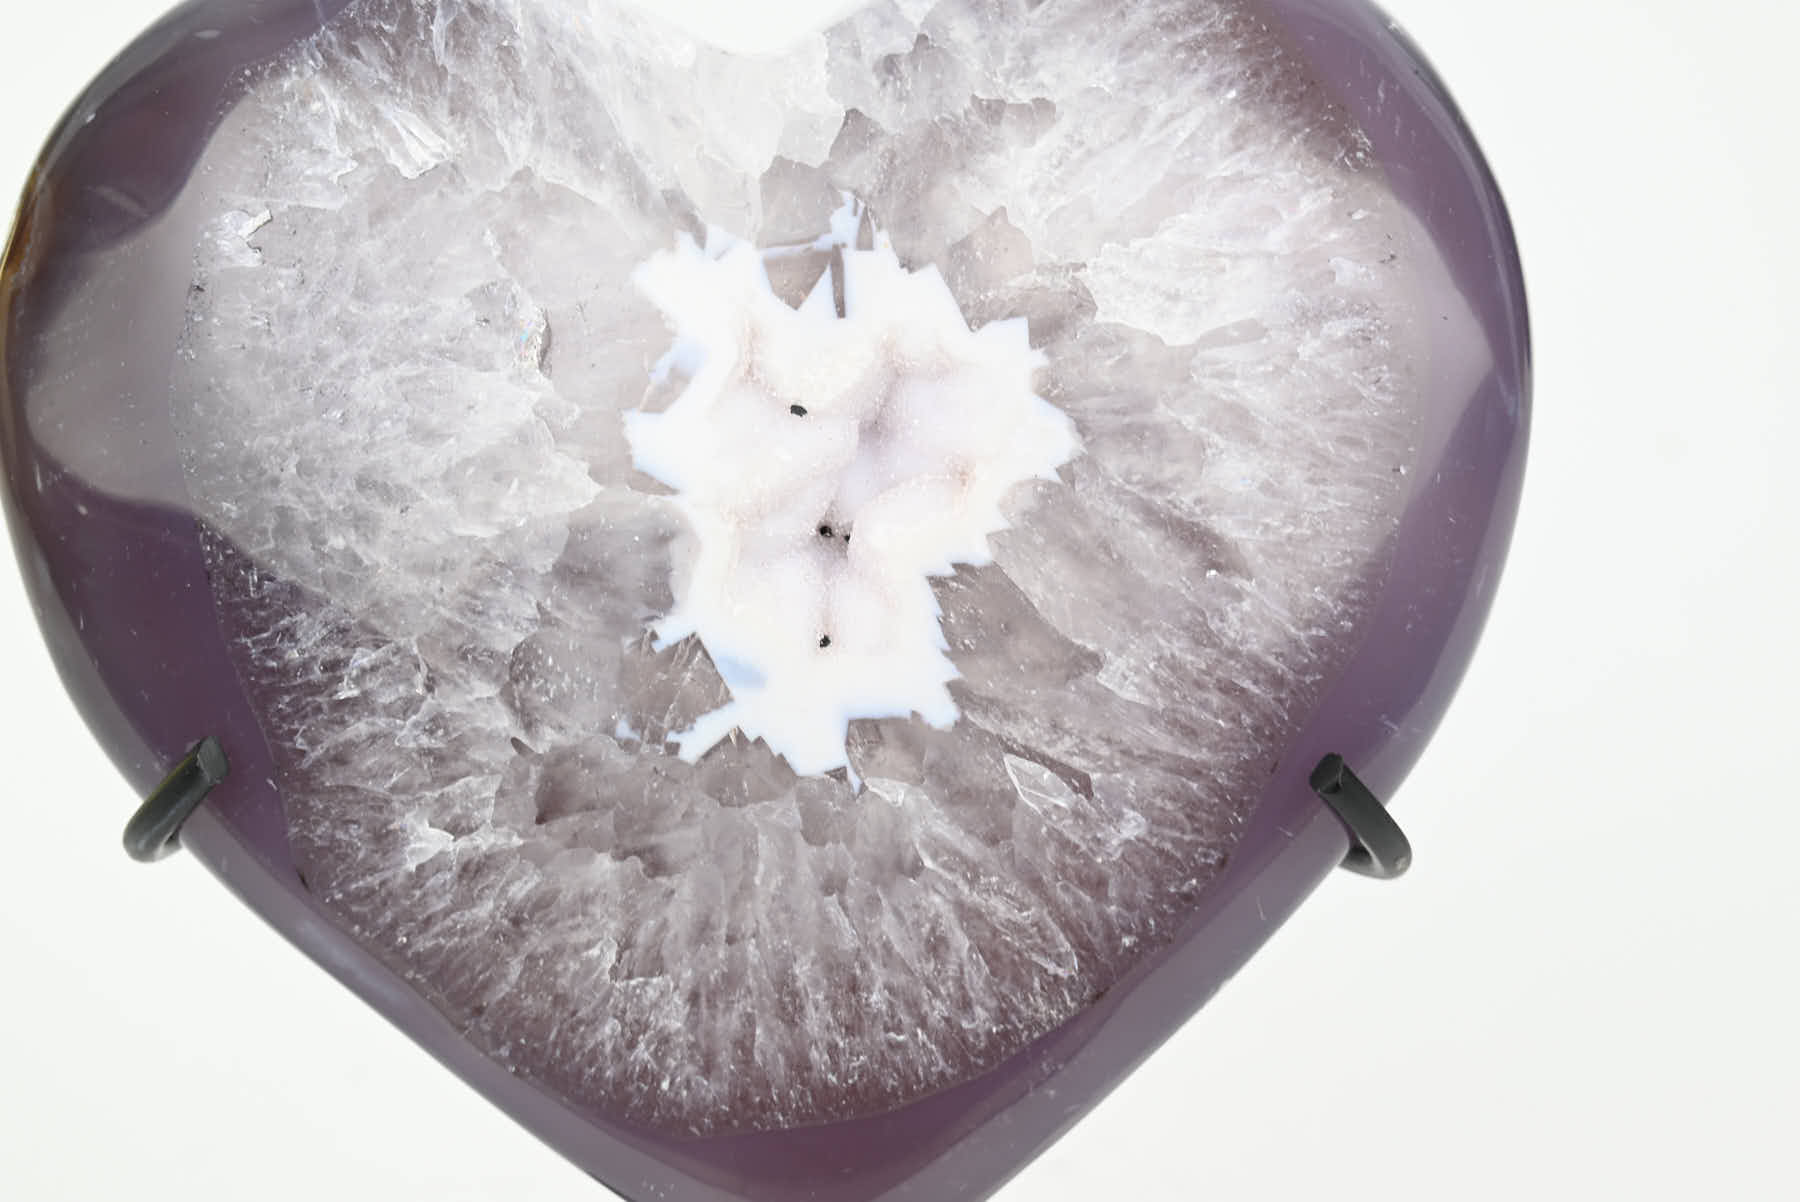 Extra Quality Agate Crystal Heart - 0.68kg, 13cm high - #HTAGAT-34012